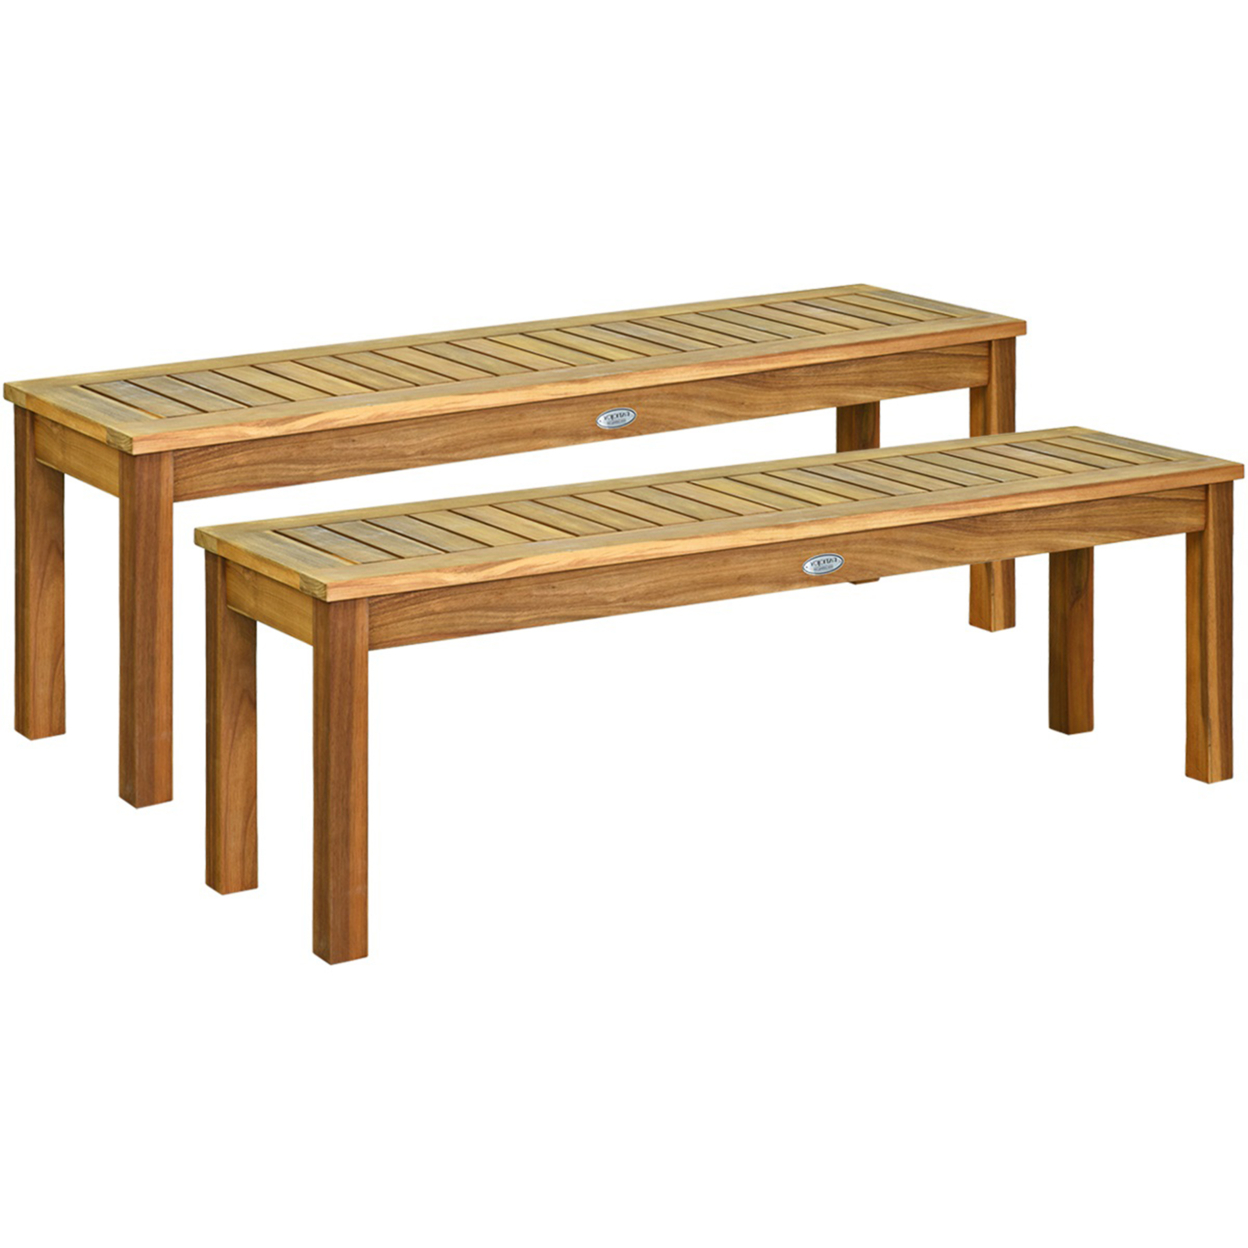 Set Of 2 Acacia Wood Bench Dining Bench Patio Garden W/ Slatted Seat Teak